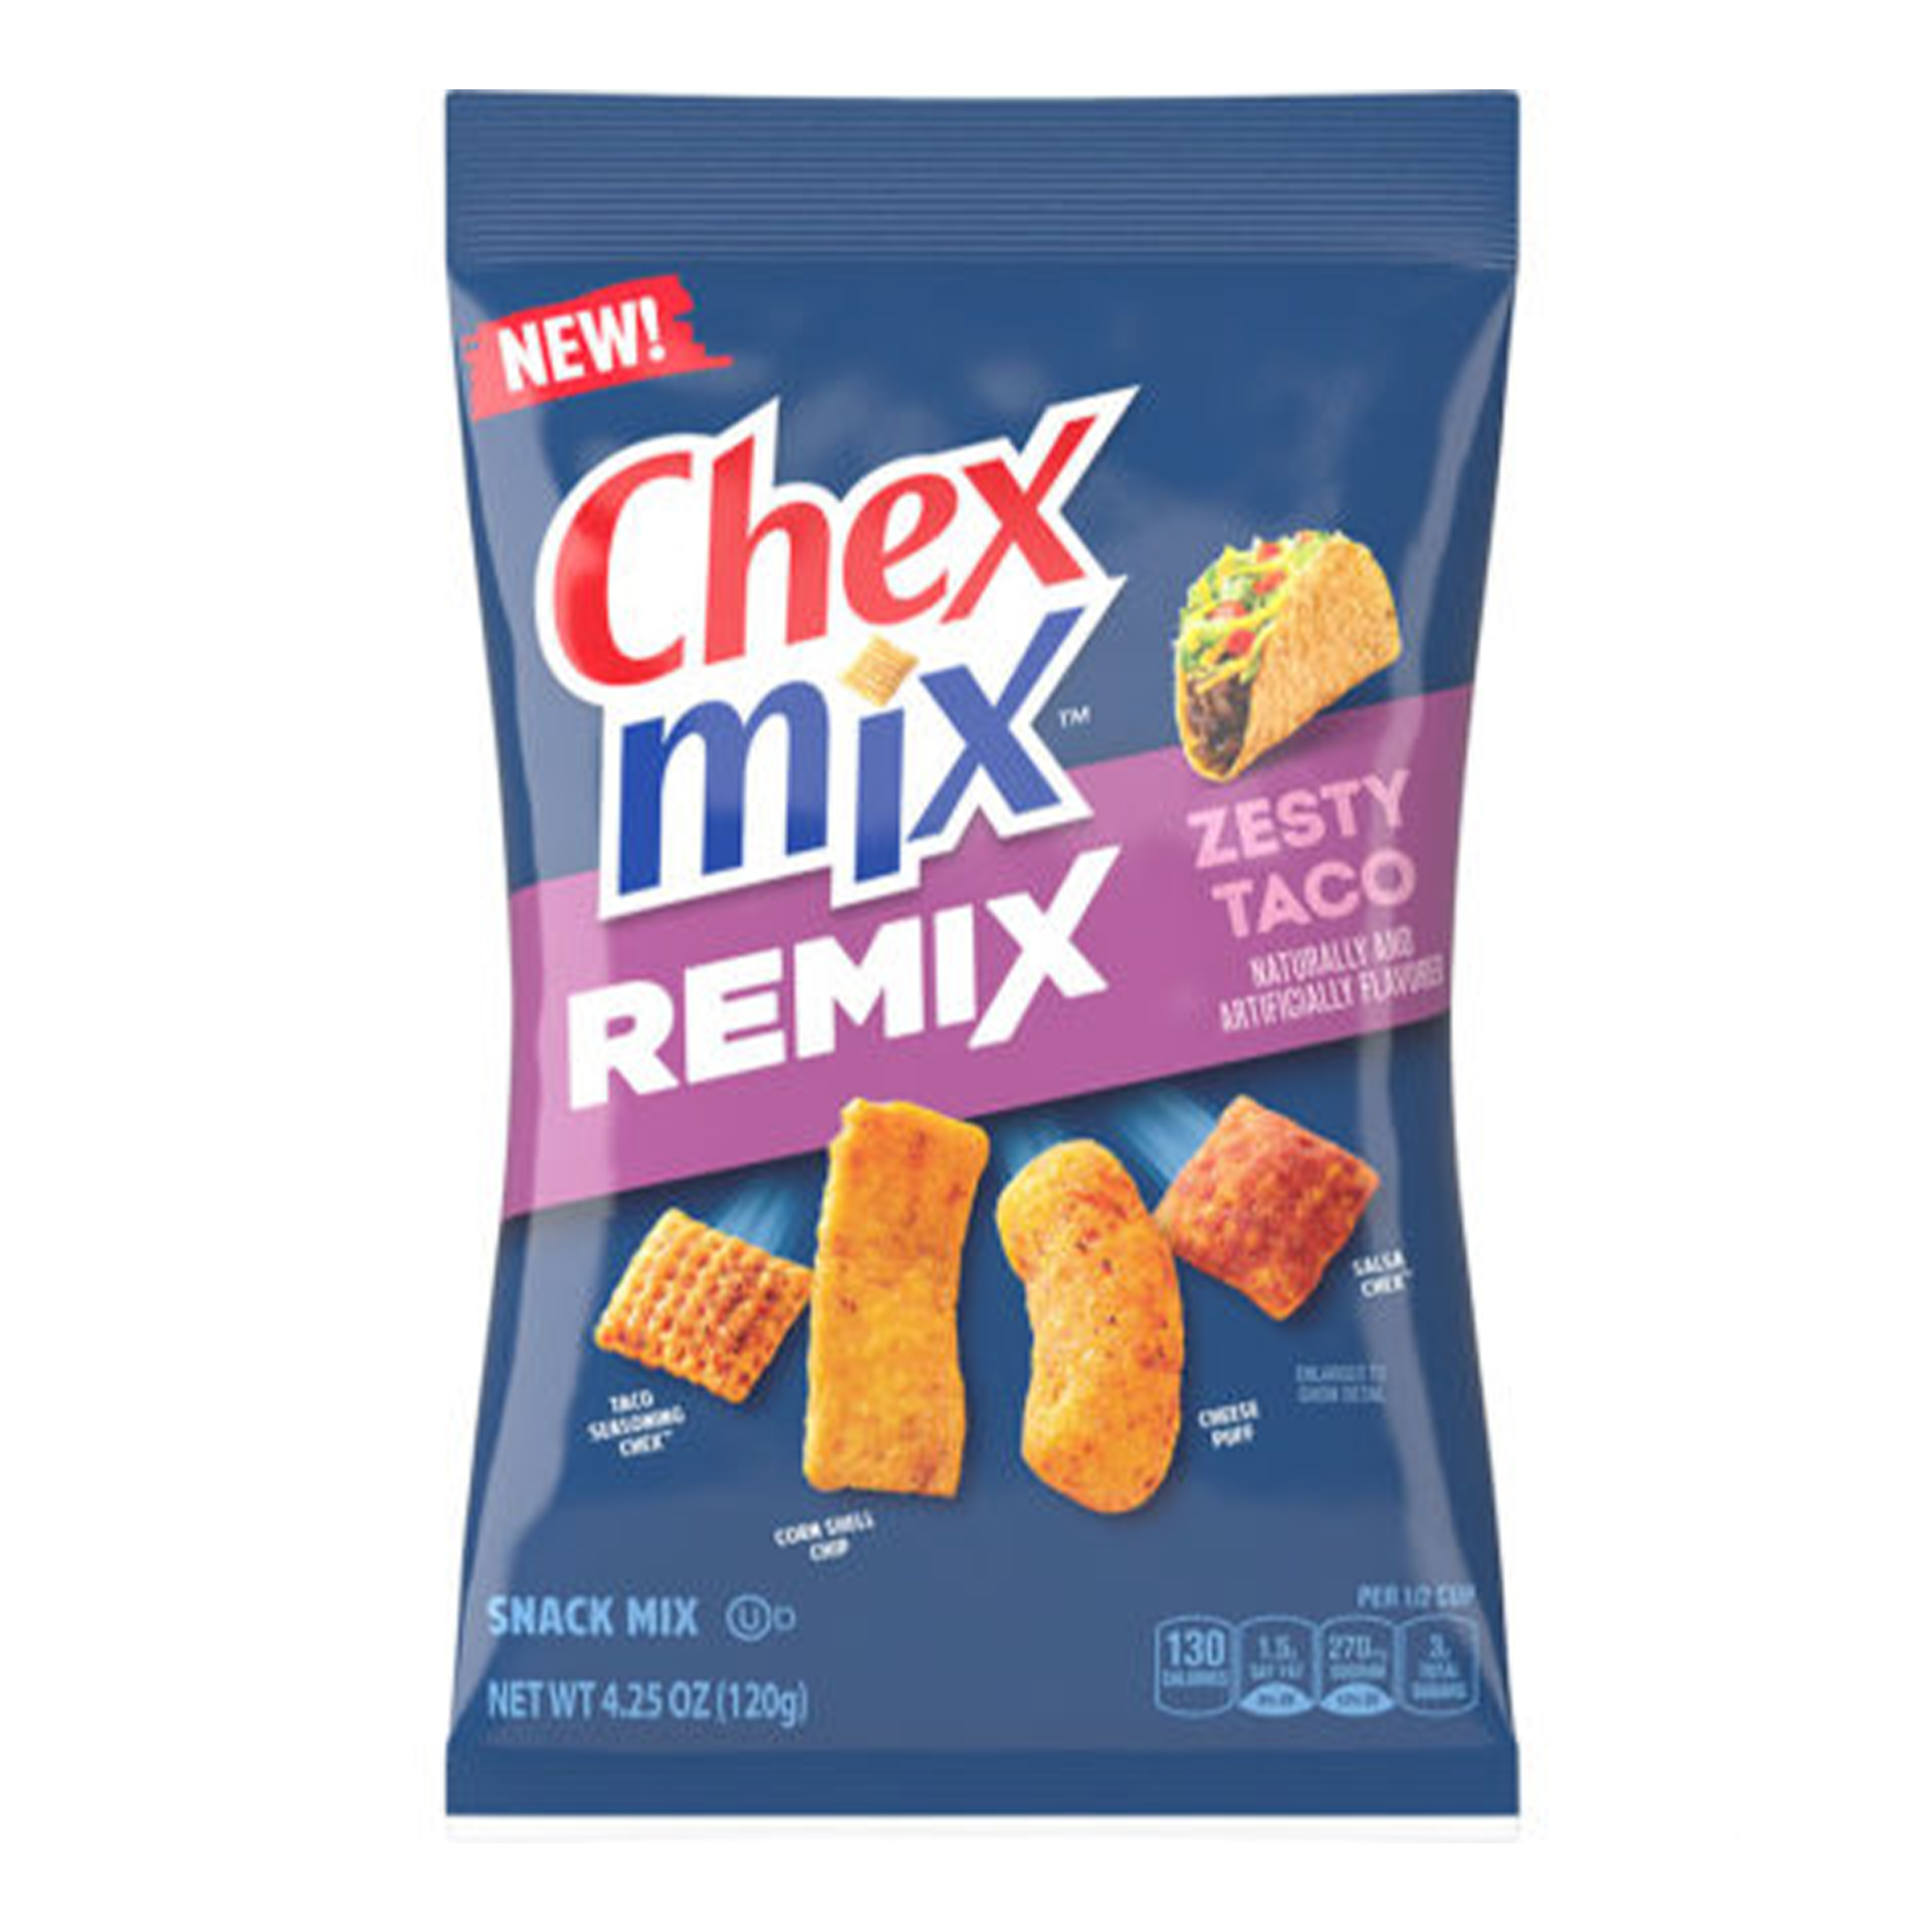 Chex Mix Remix - Zesty Taco Flavor